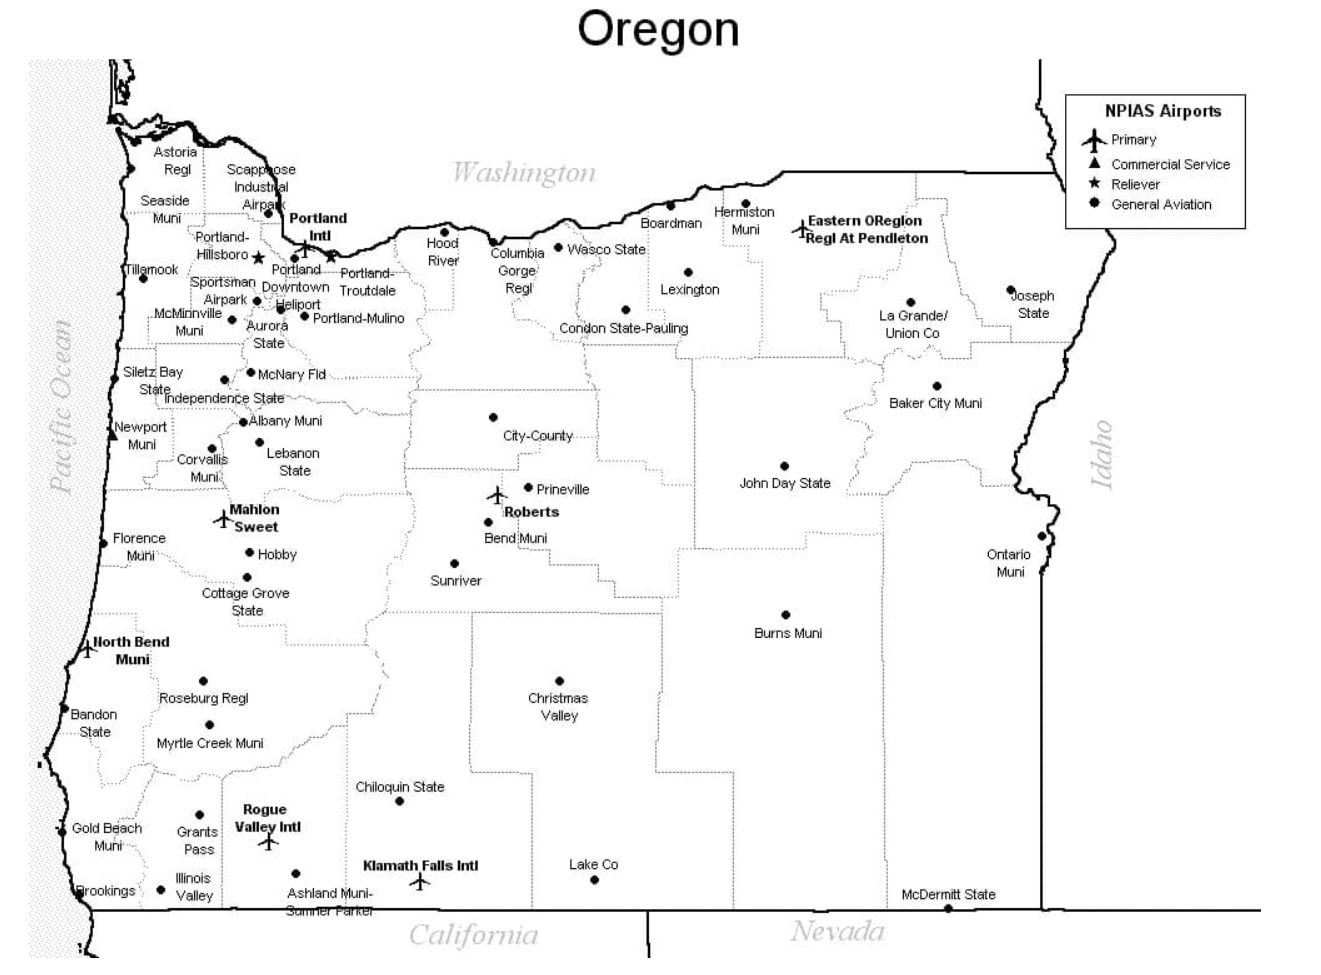 Oregon-airports-map